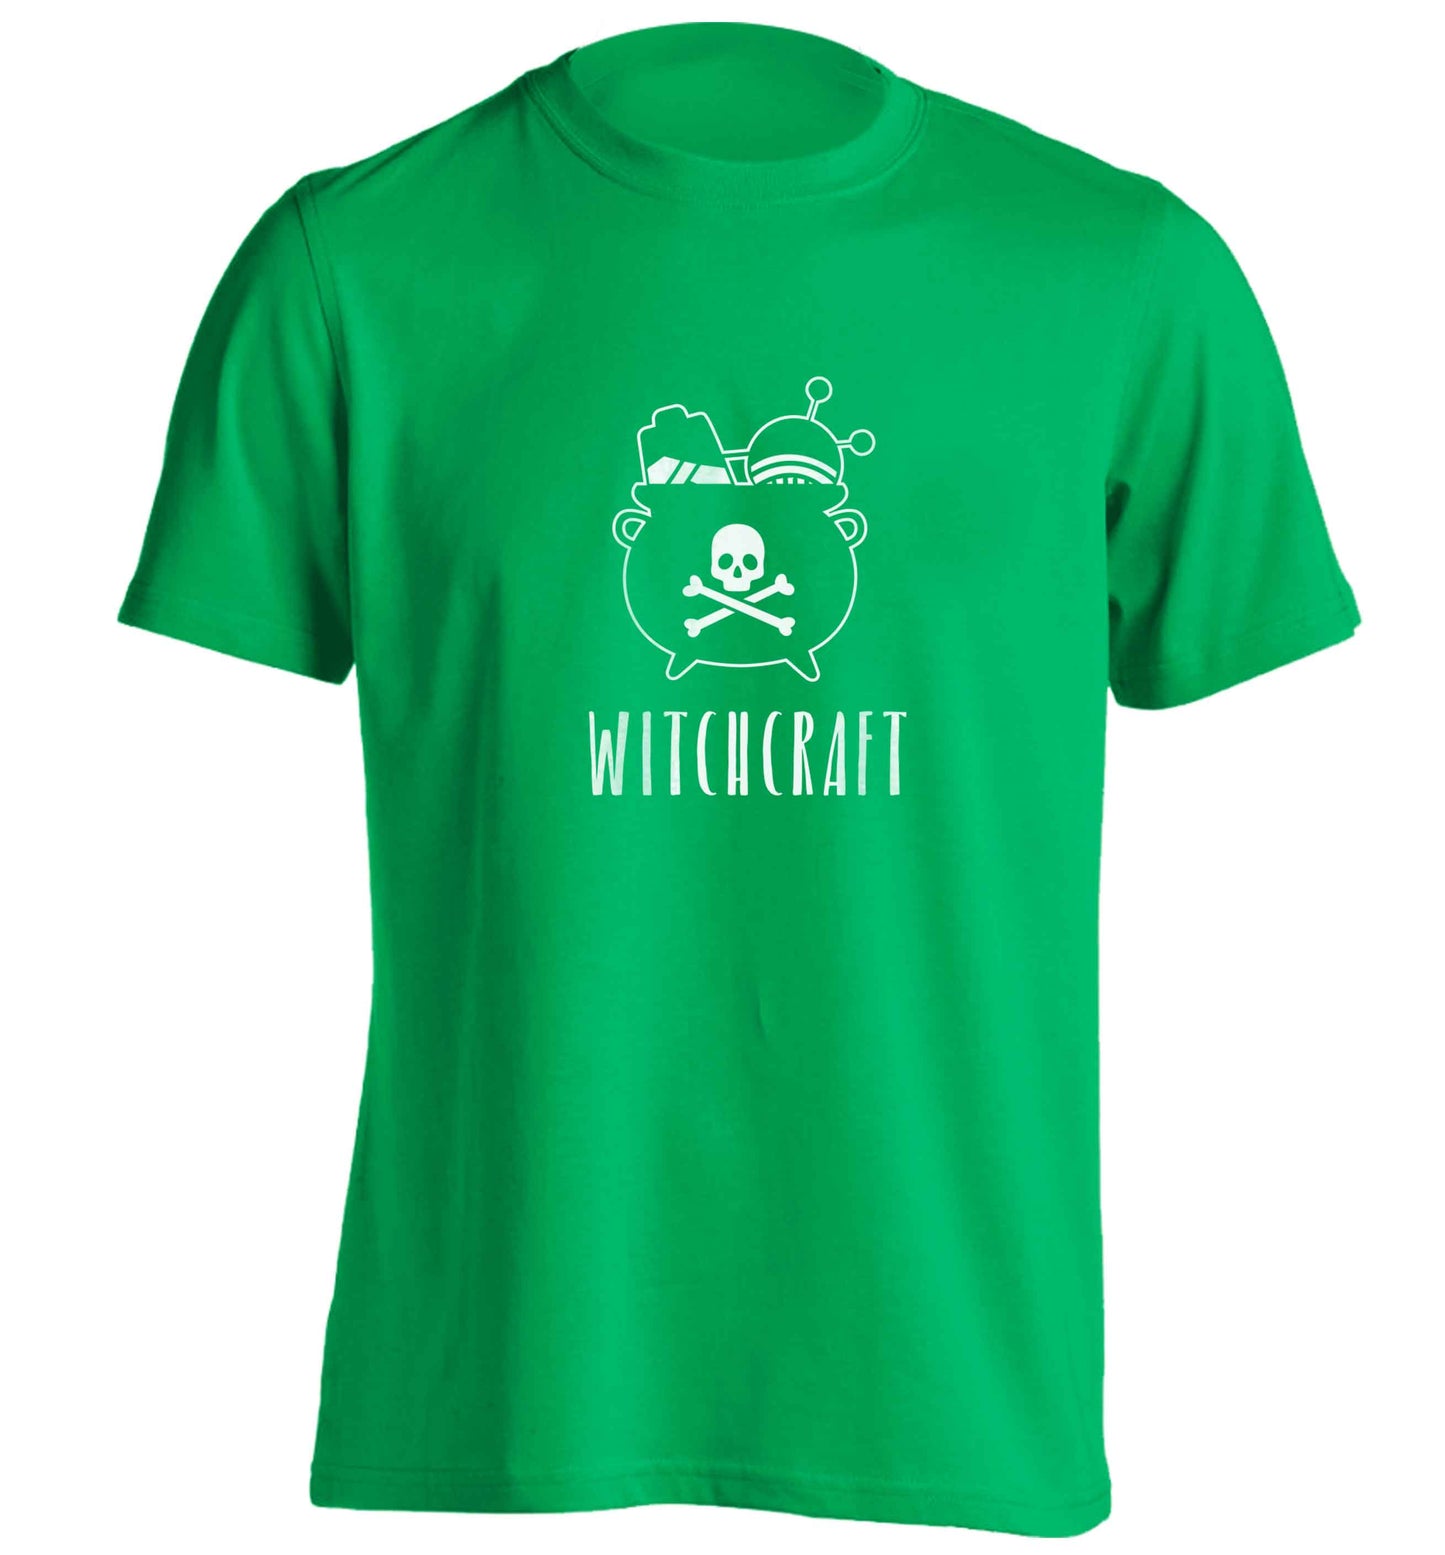 Witchcraft adults unisex green Tshirt 2XL